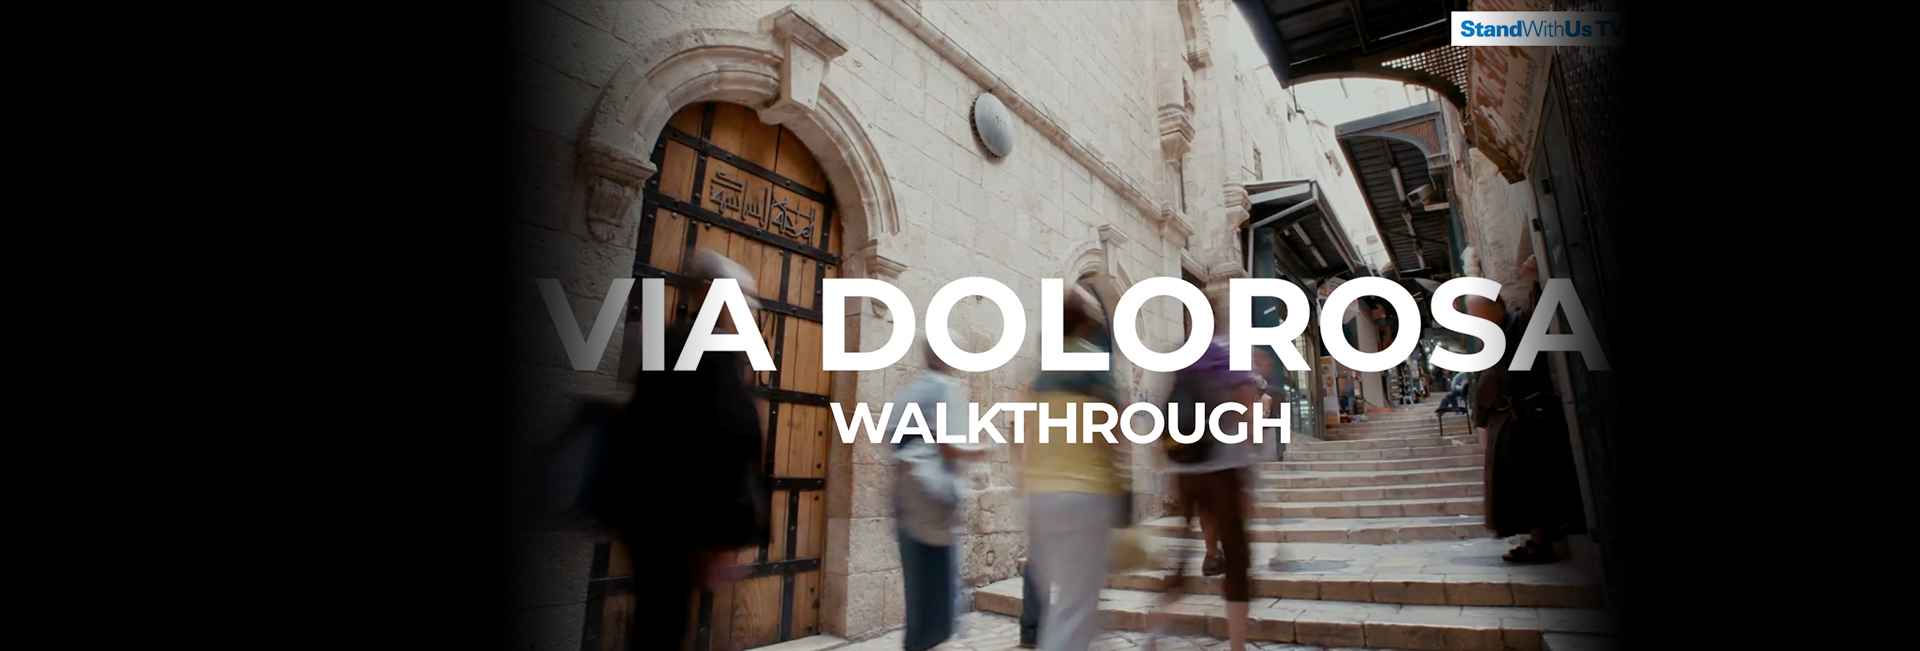 Via Dolorosa, Jerusalem | WalkThrough